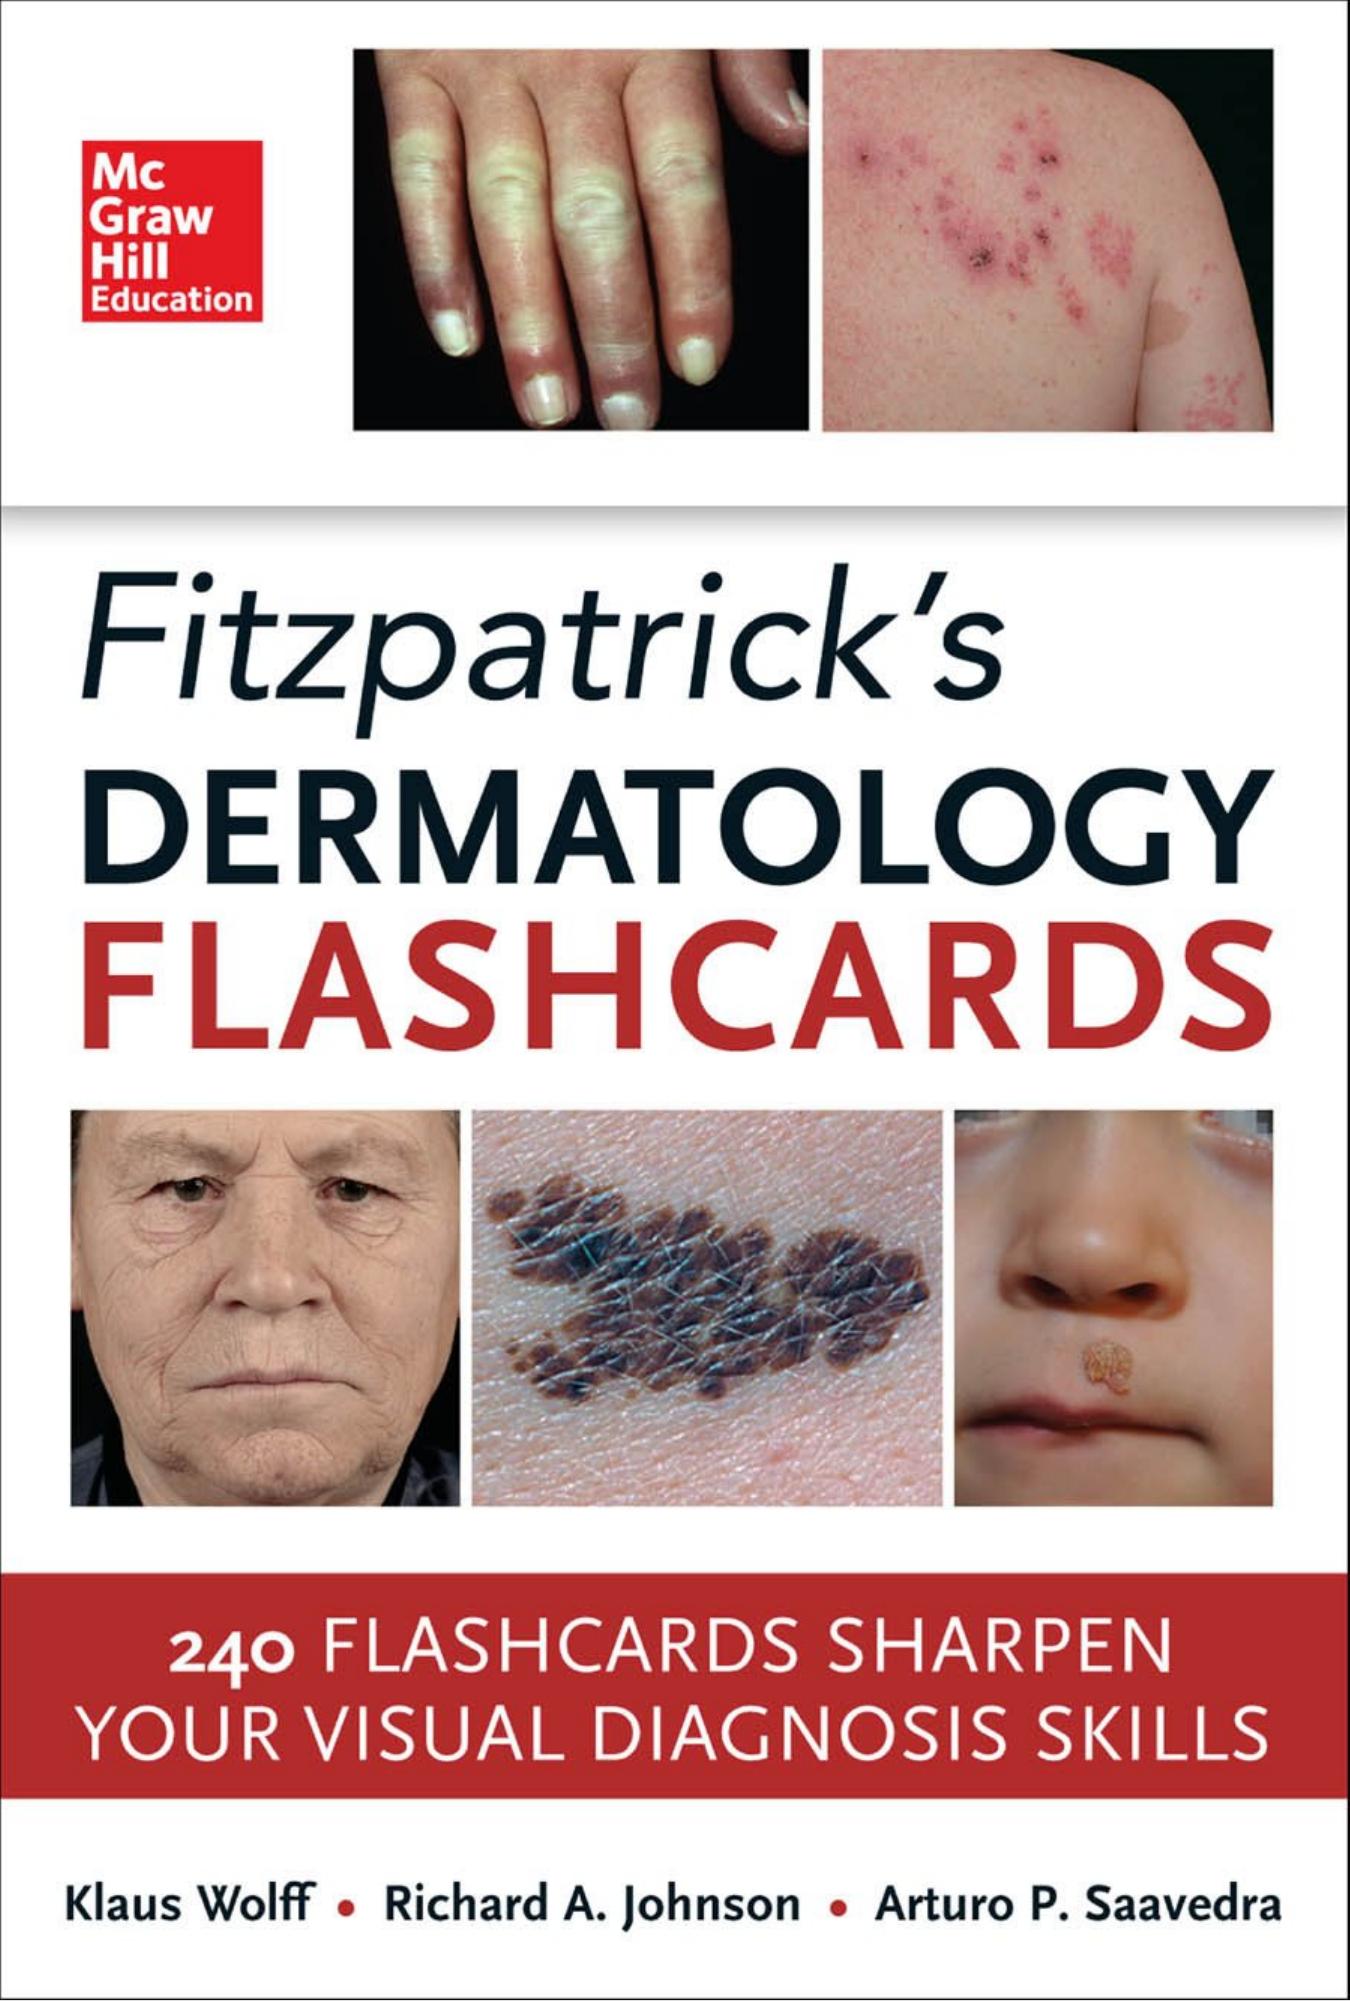 Fitzpatrick's Dermatology Flash Cards.jpg